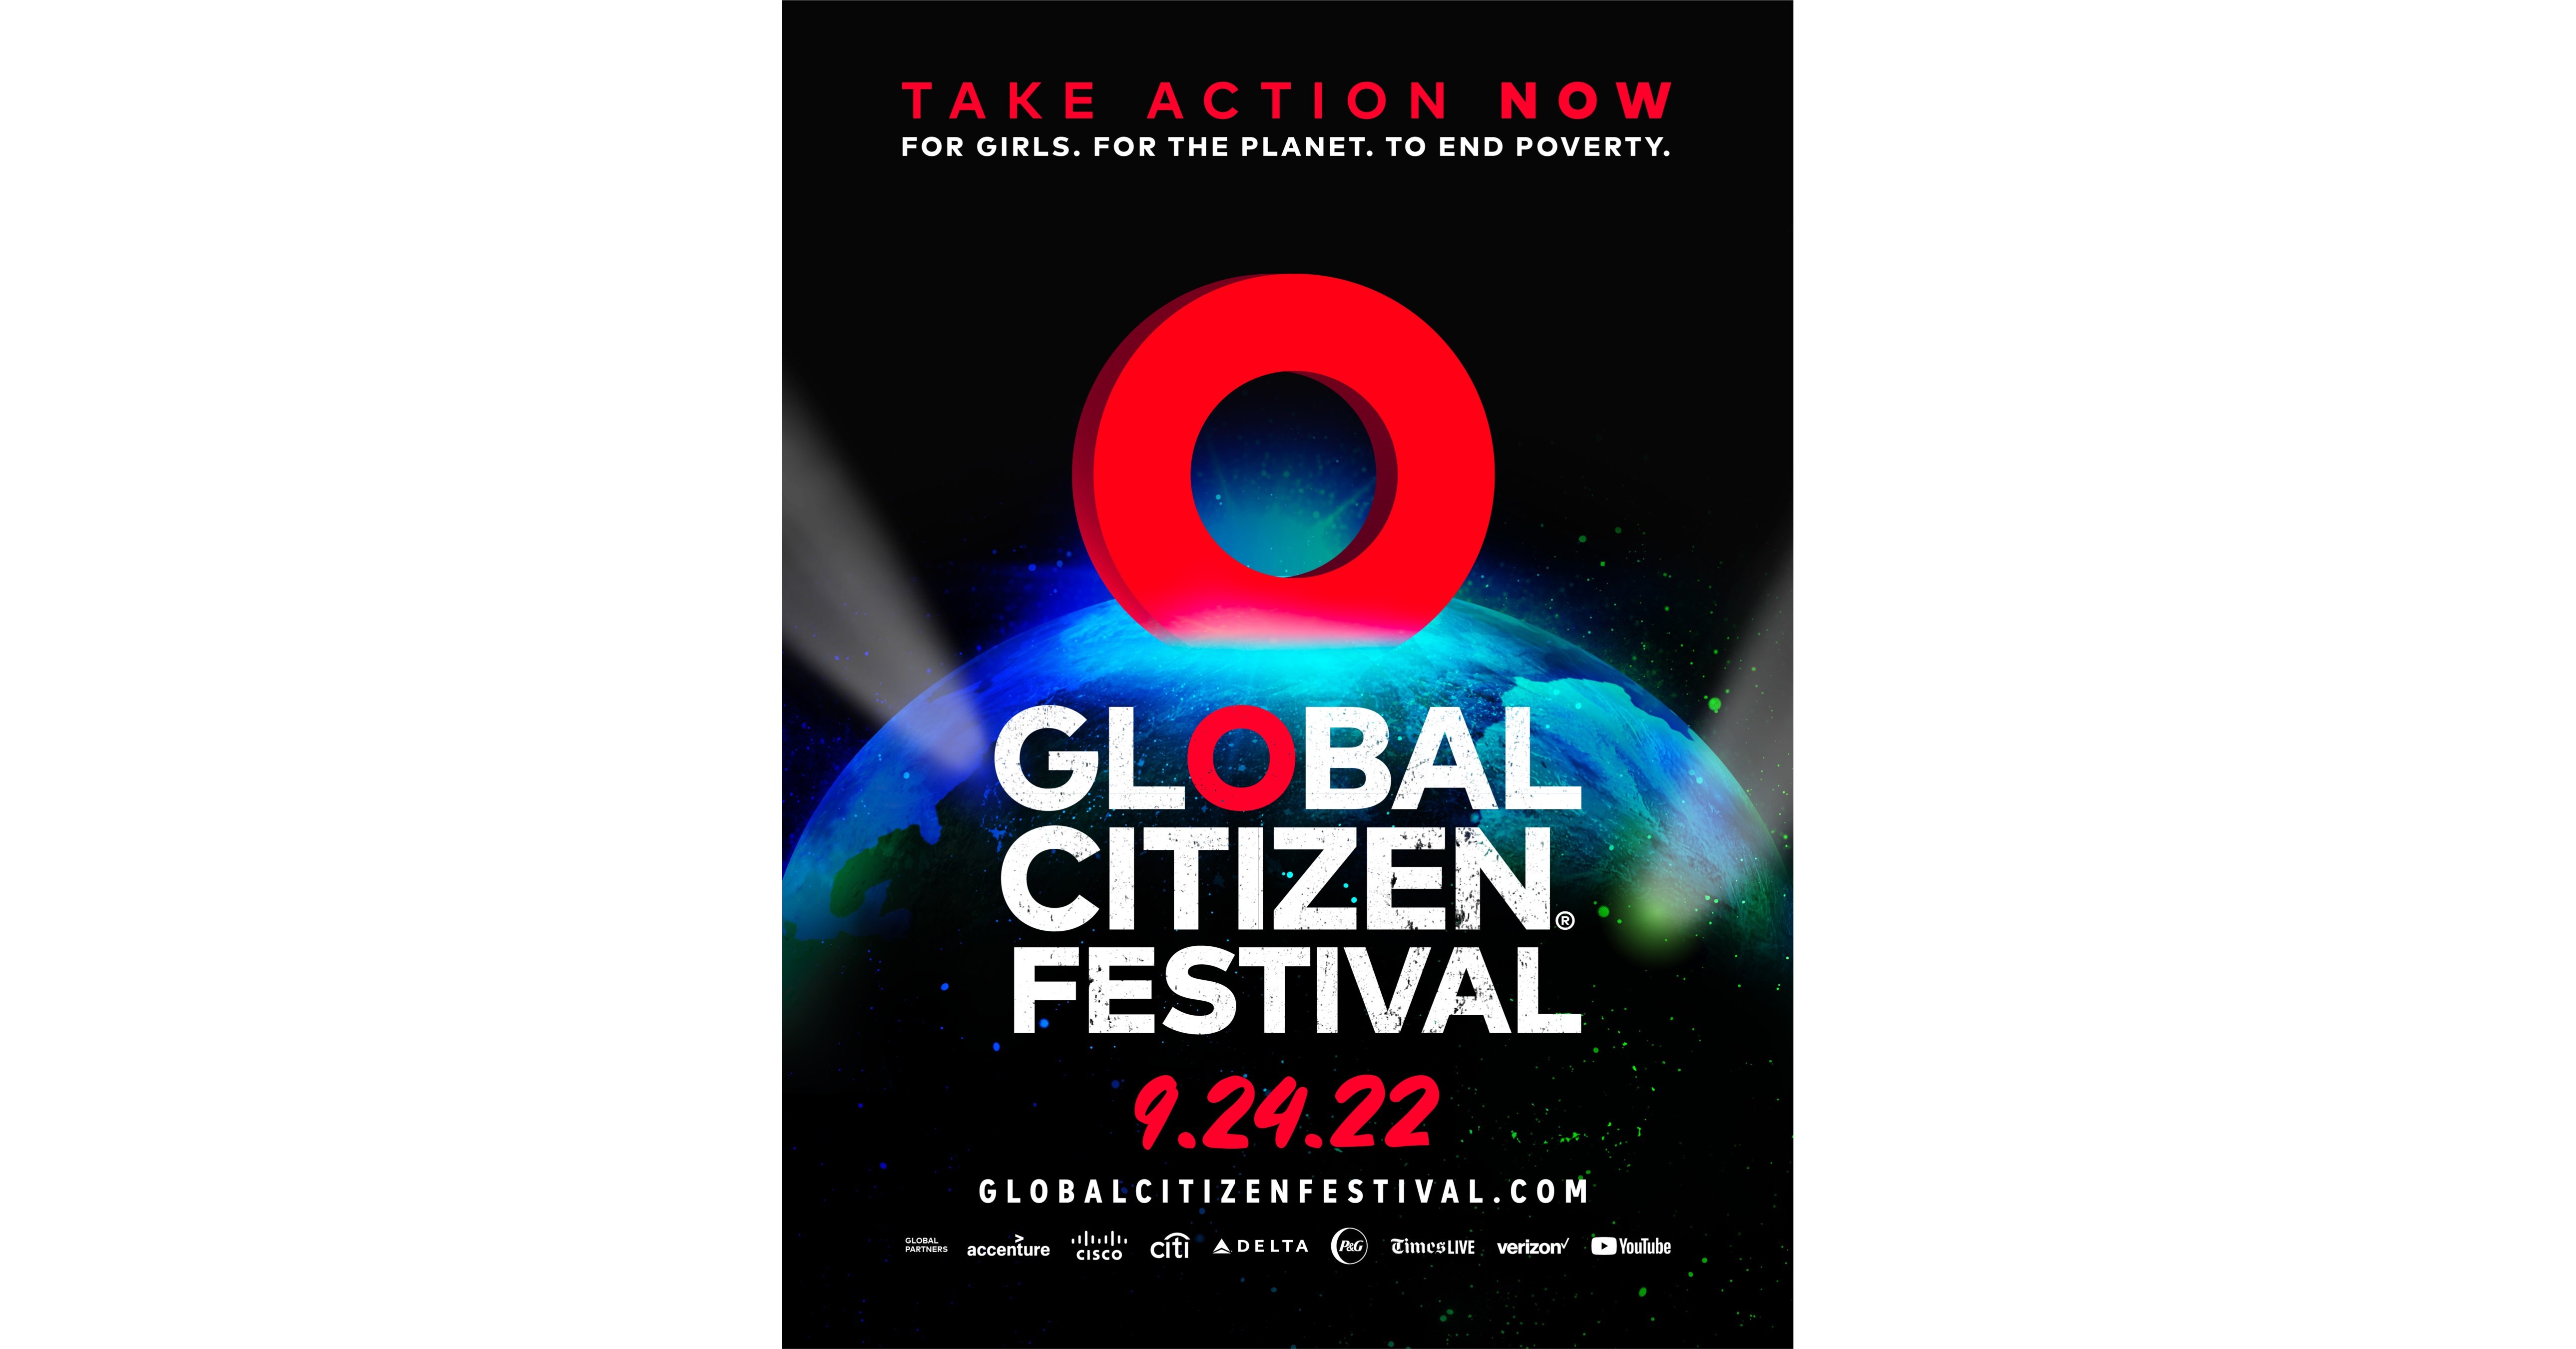 GLOBAL CITIZEN ANNOUNCES LINEUPS FOR 2022 GLOBAL CITIZEN FESTIVAL IN